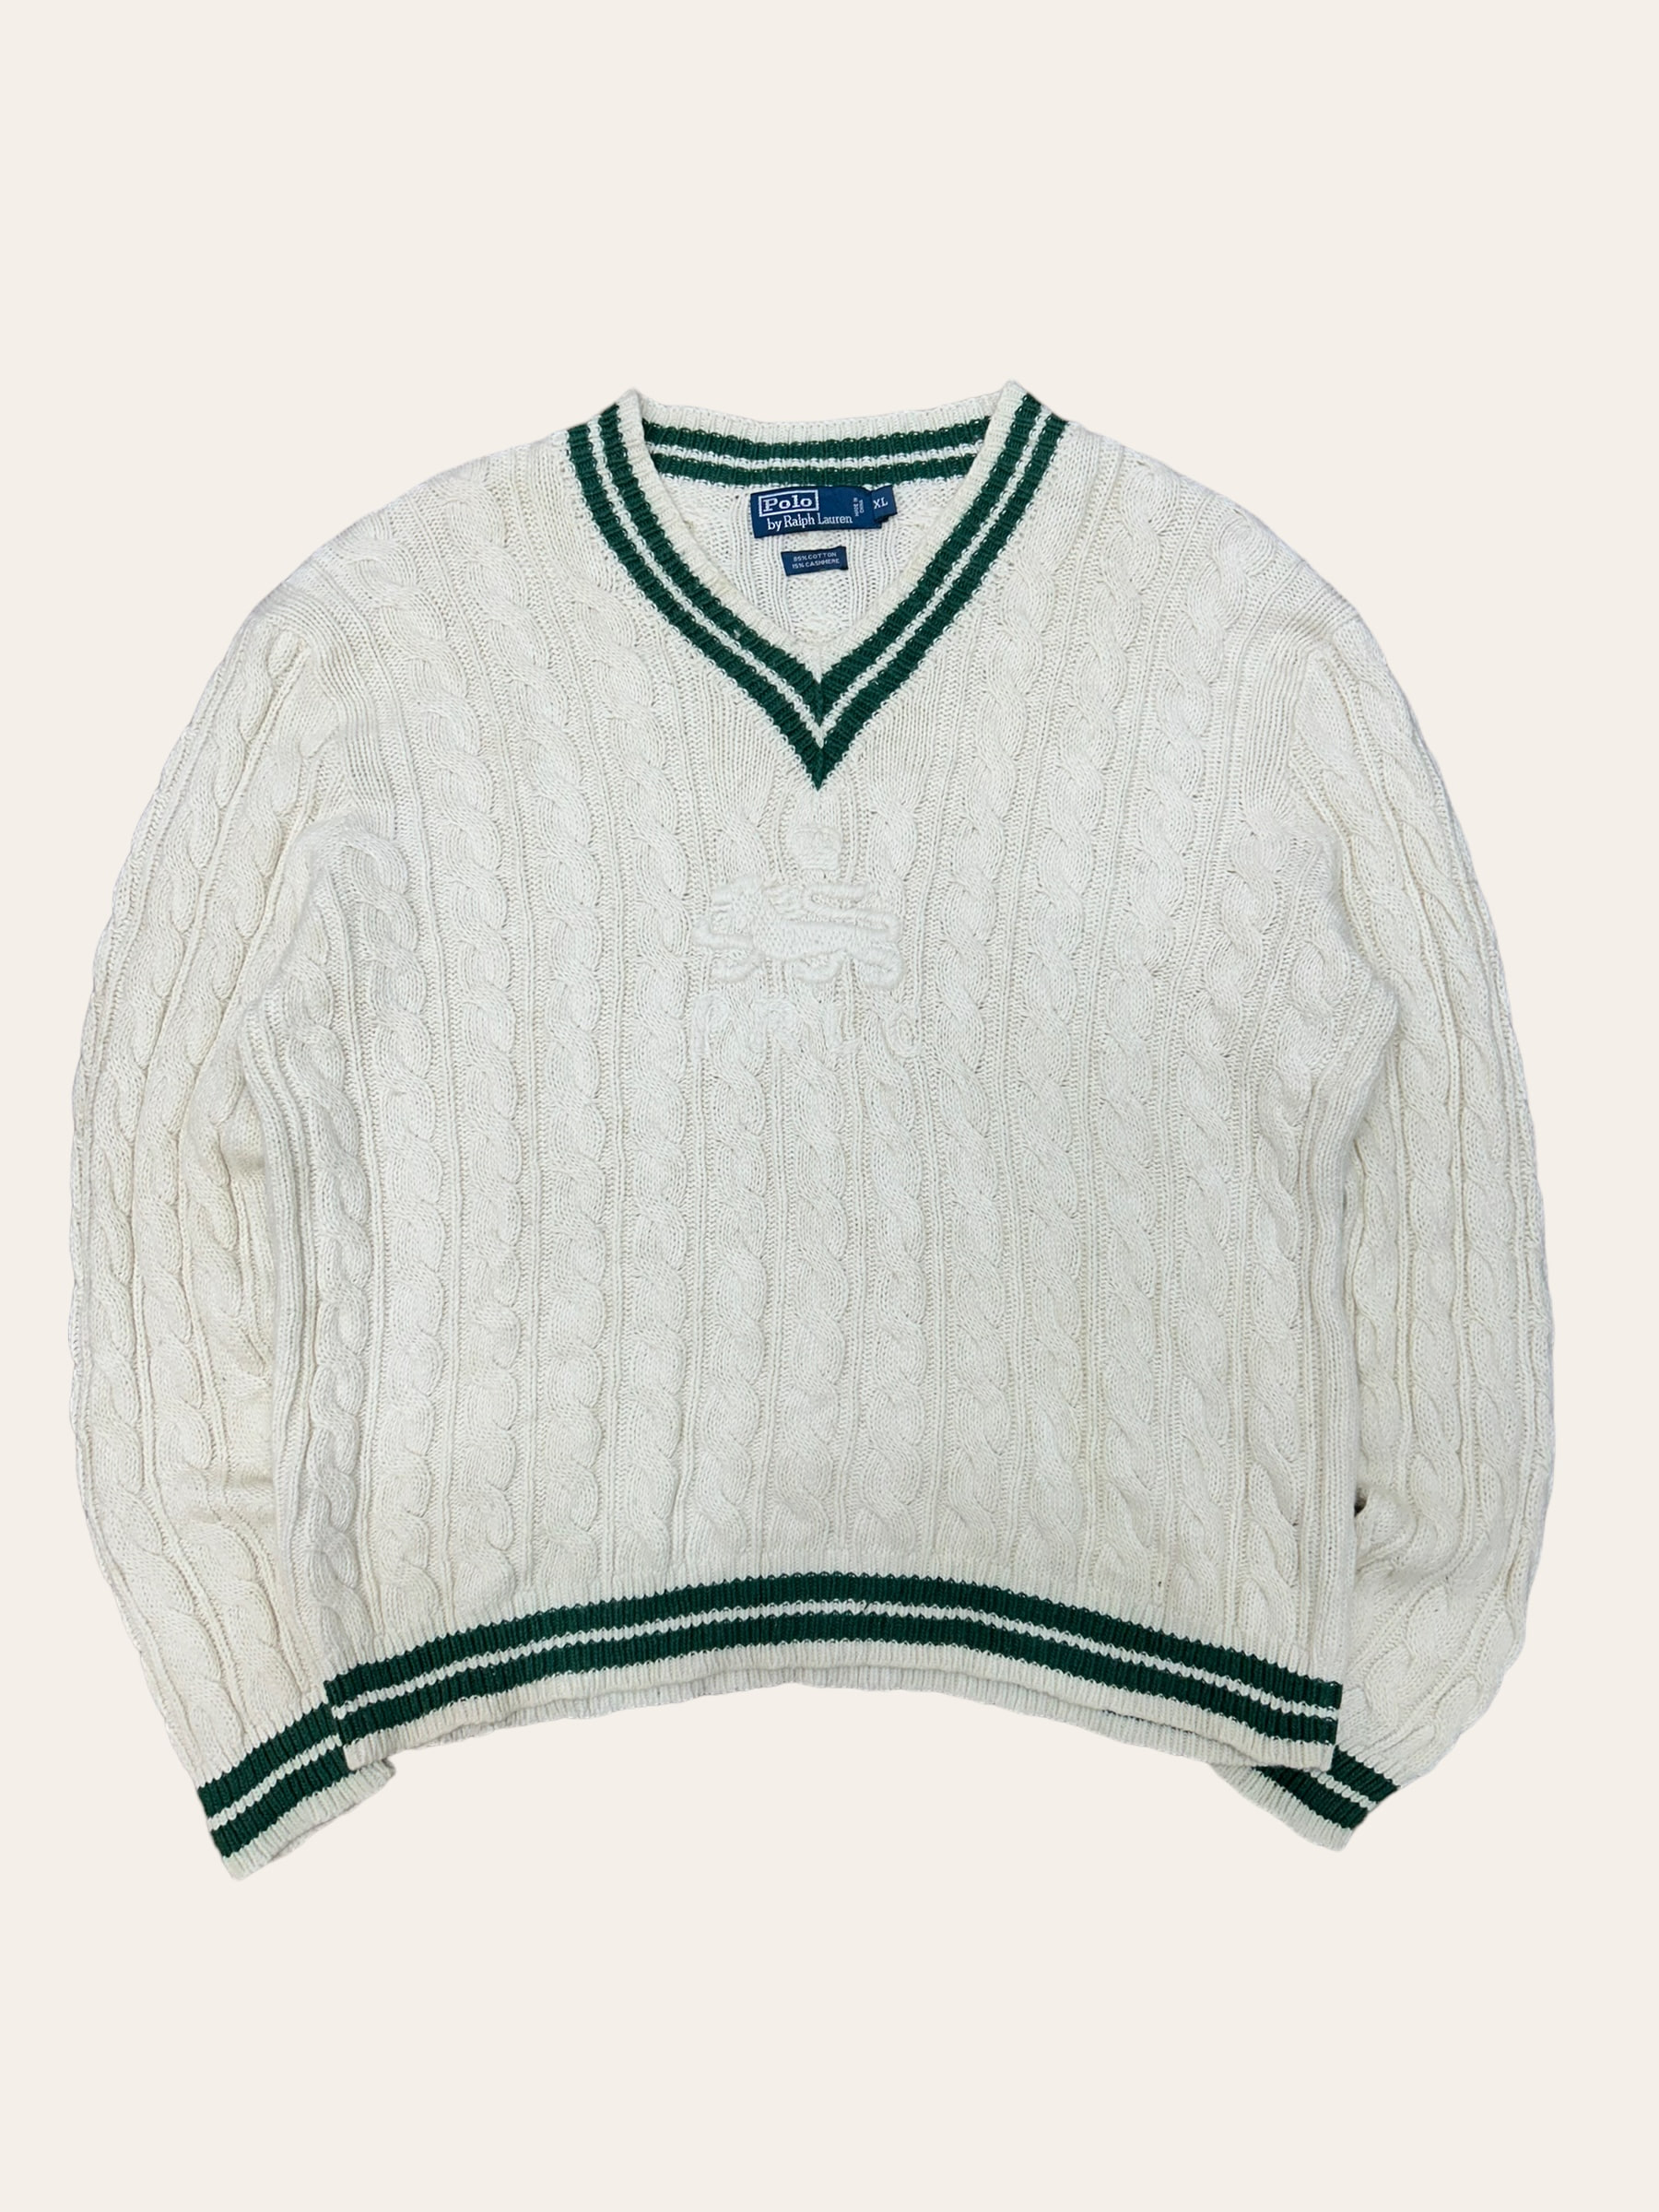 Polo ralph lauren cream color cashmere blend cricket sweater XL